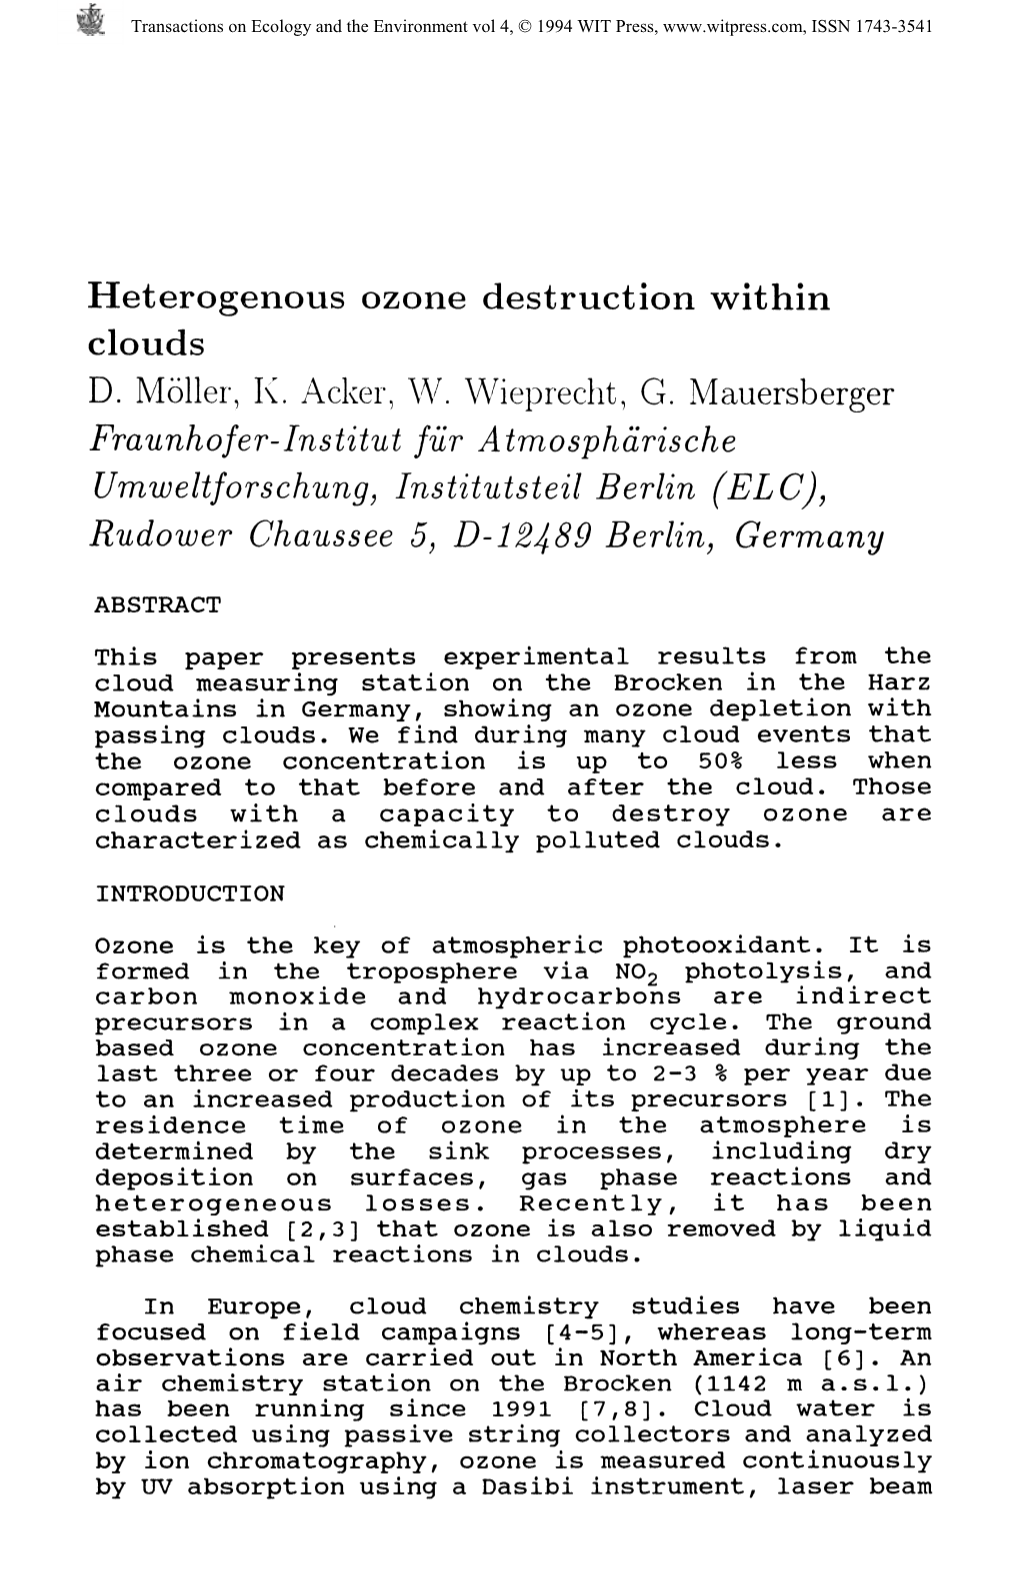 Heterogenous Ozone Destruction Within Clouds D. Moller, K. Acker, W